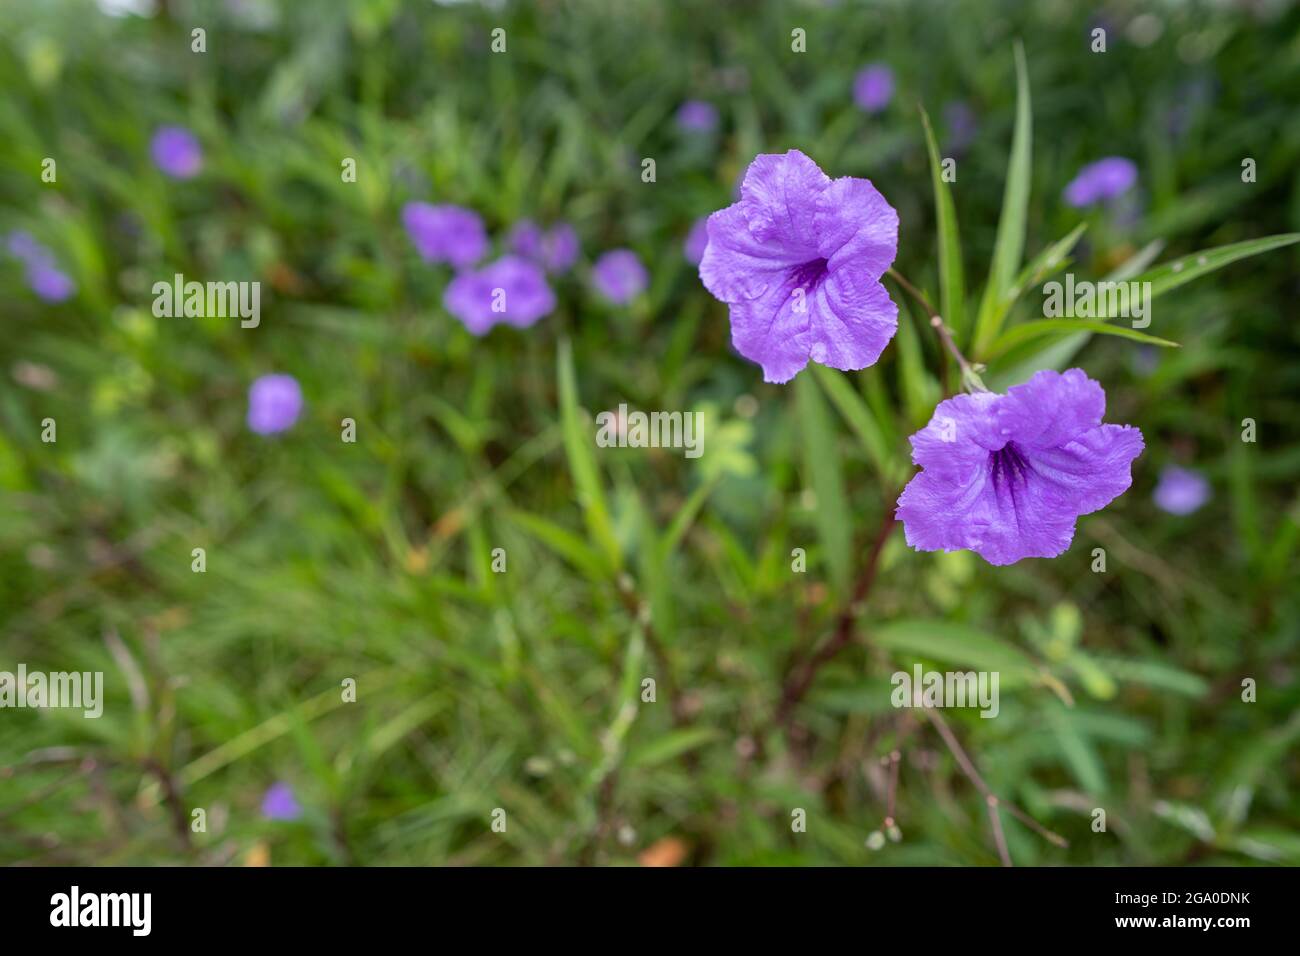 Selective focus shot of purple flower in the garden Stock Photo